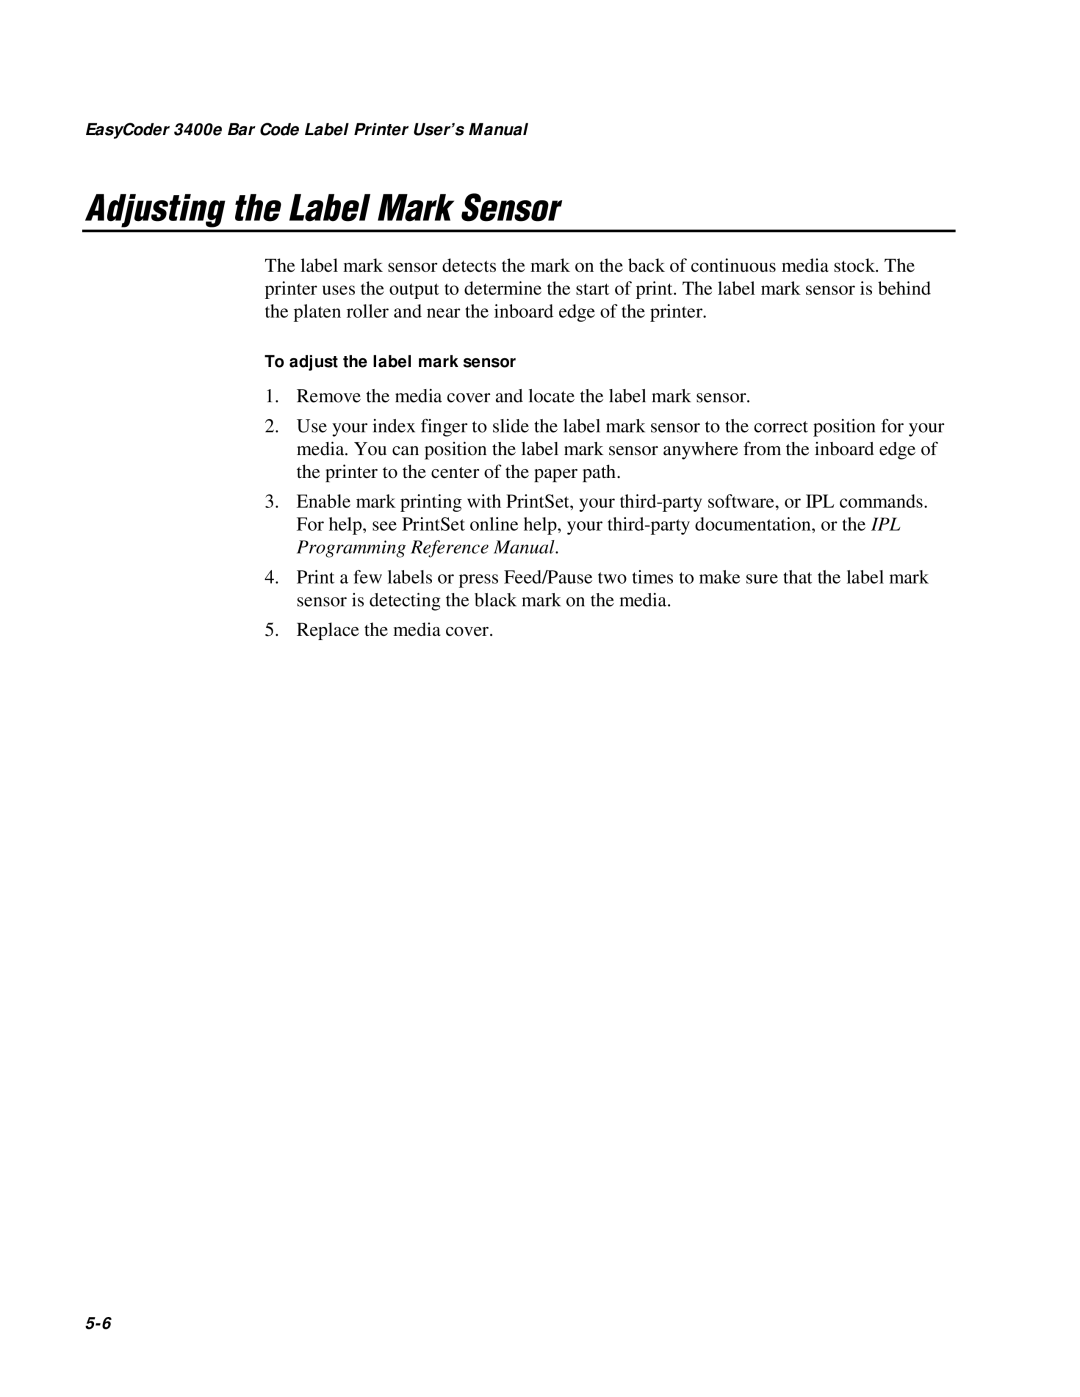 IBM user manual Adjusting the Label Mark Sensor, EasyCoder 3400e Bar Code Label Printer User’s Manual 